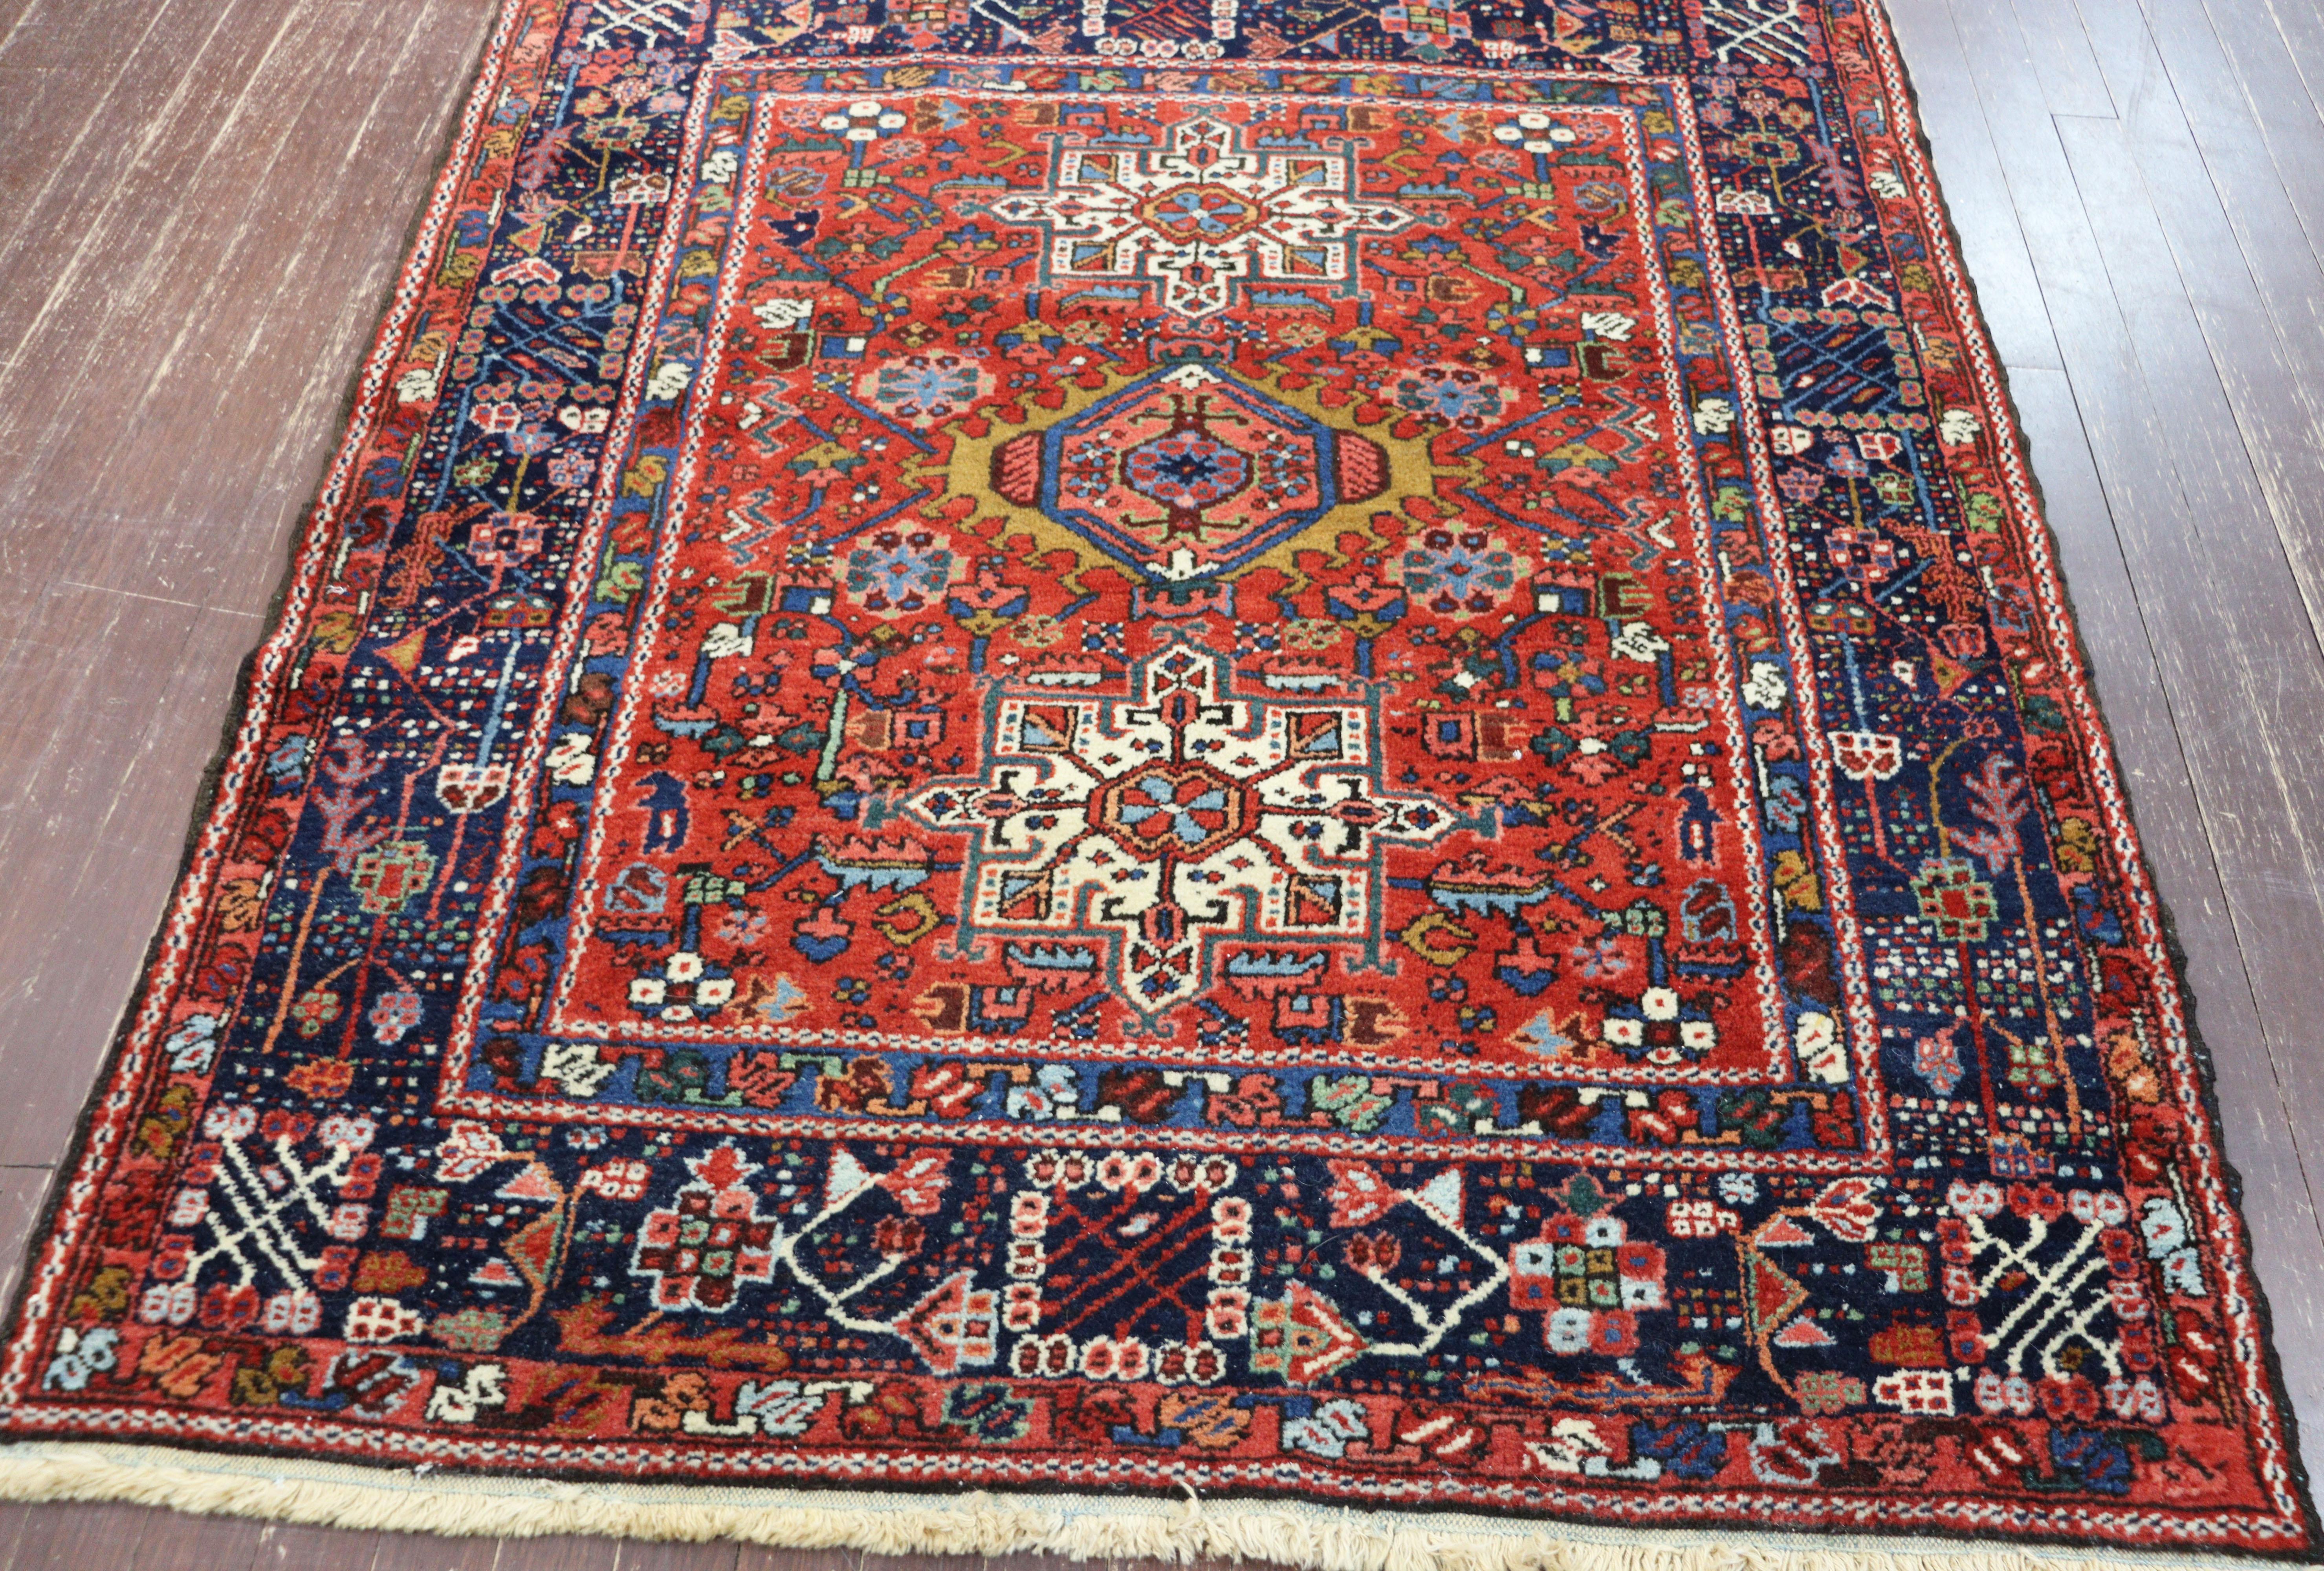 Hand-Knotted Antique Persian Karaja/ Heriz Rug, Amazing Color 4' x 4'6